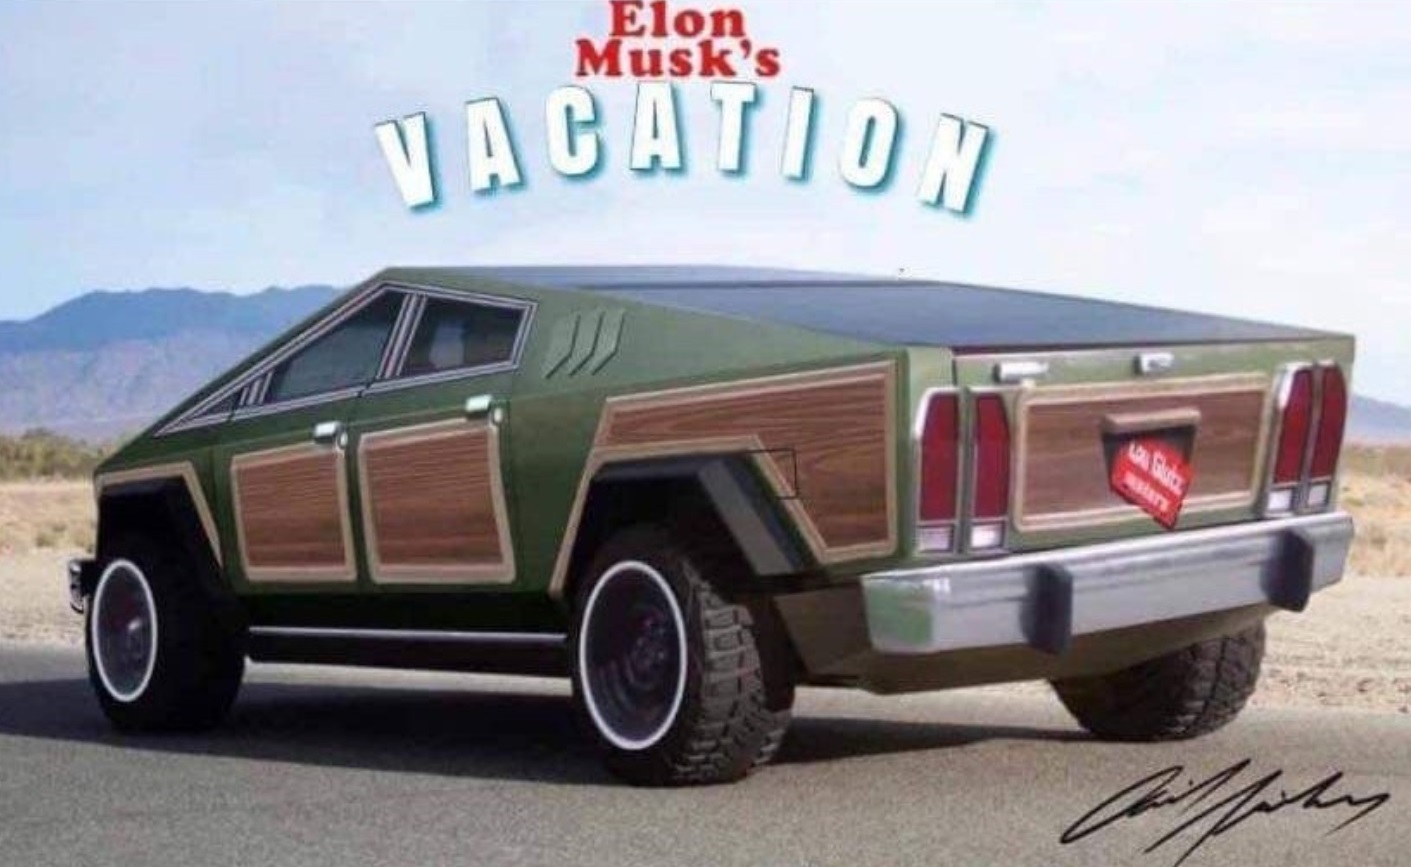 PHOTO Elon Musk's Vacation Tesla Cybertruck With Wooden Panels